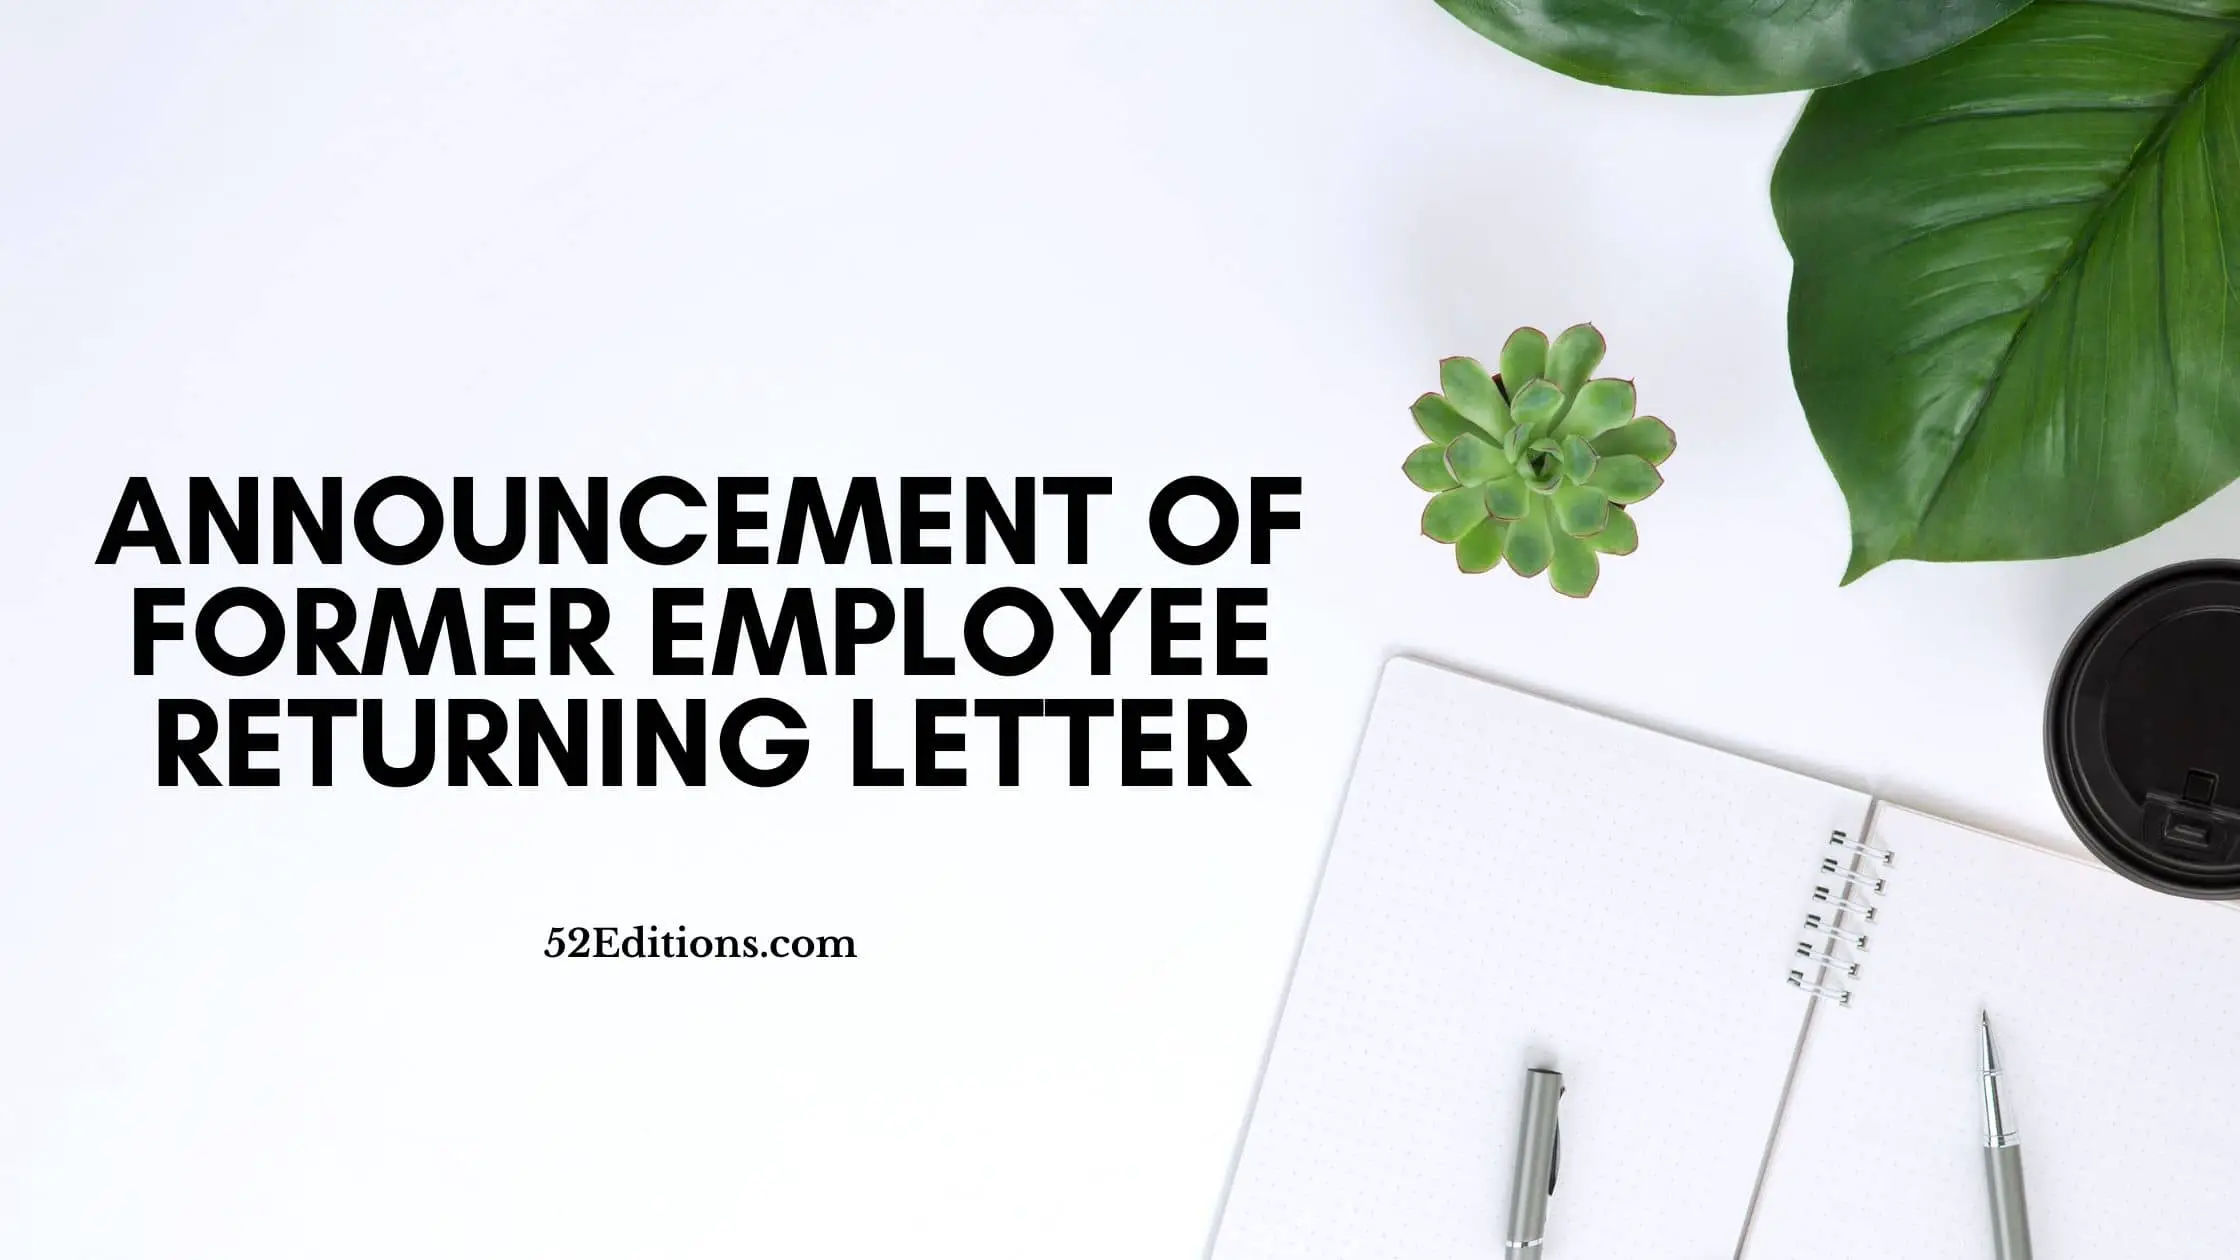 Sample Announcement of Former Employee Returning Letter // FREE